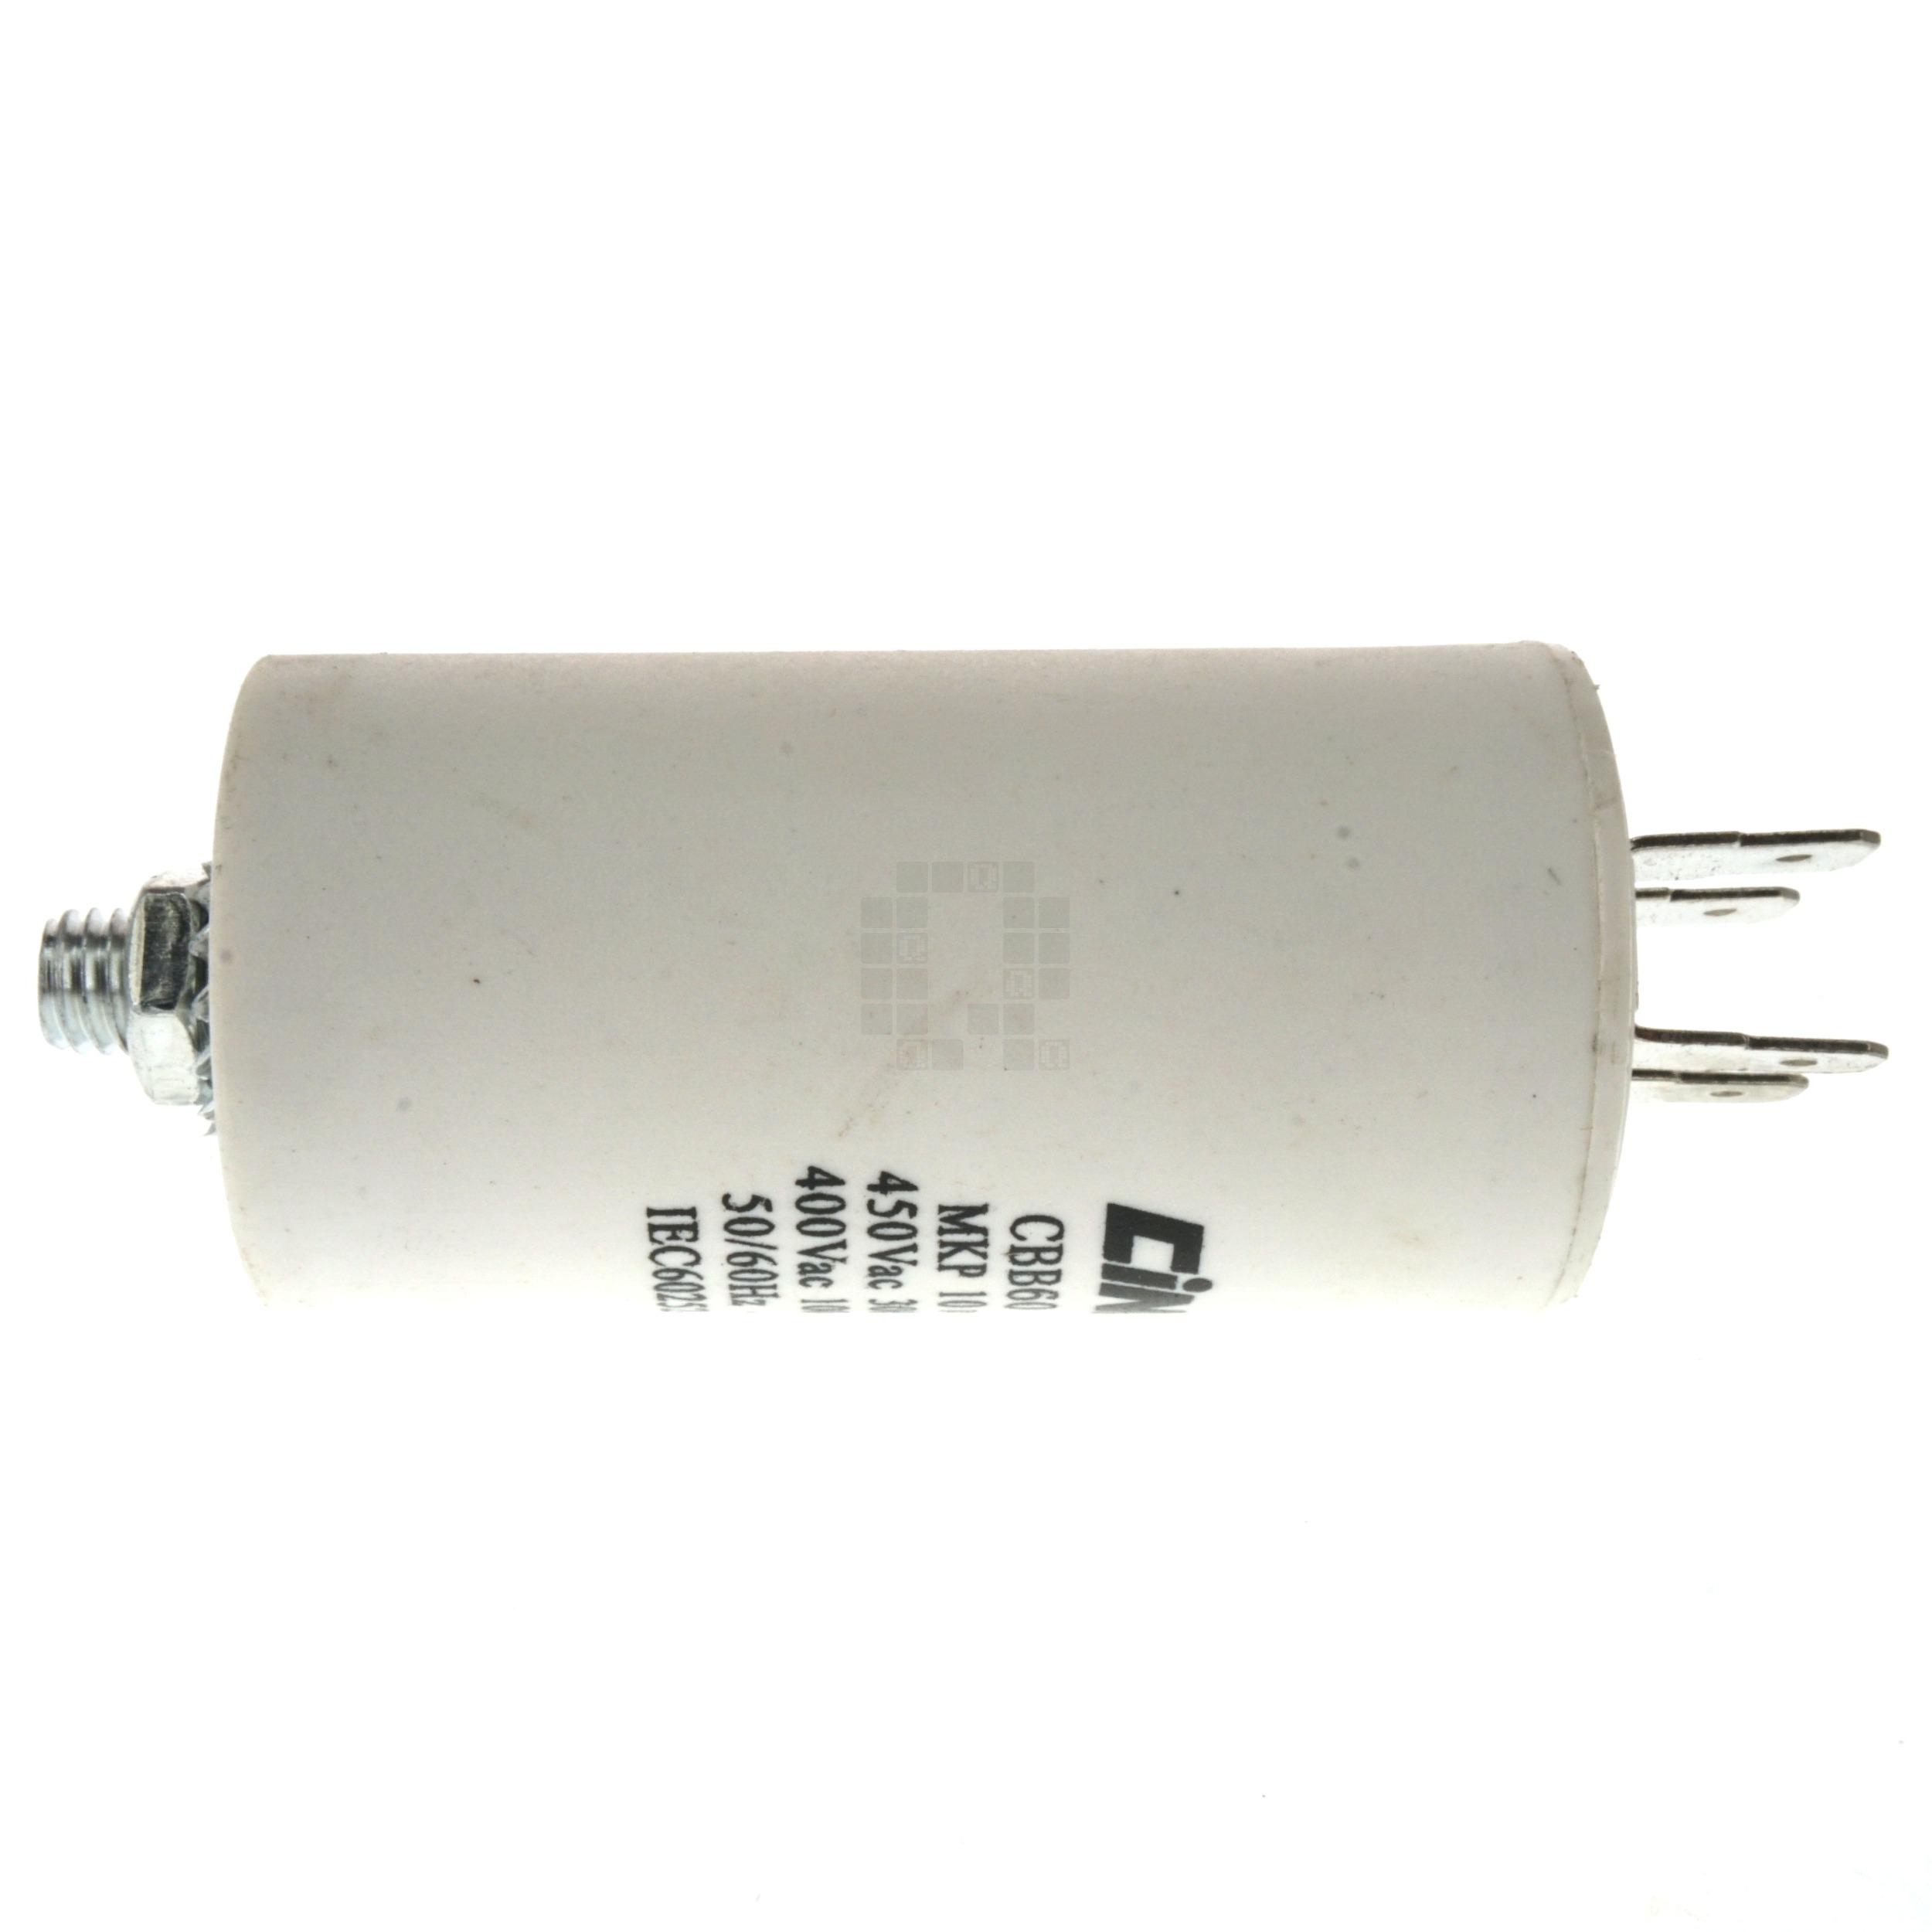 Kondensator, 10µF / 450 V, für Pumpe PQm60